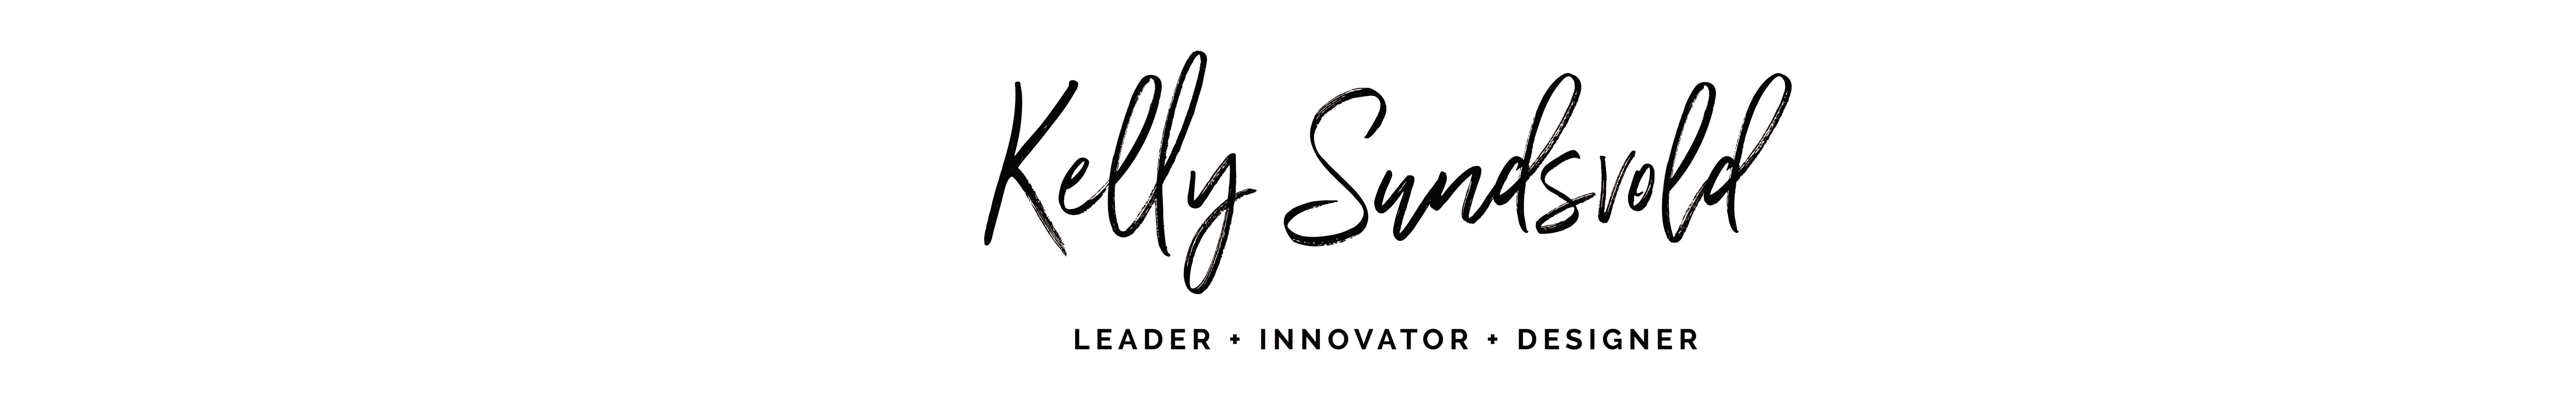 Banner de perfil de Kelly Sundsvold